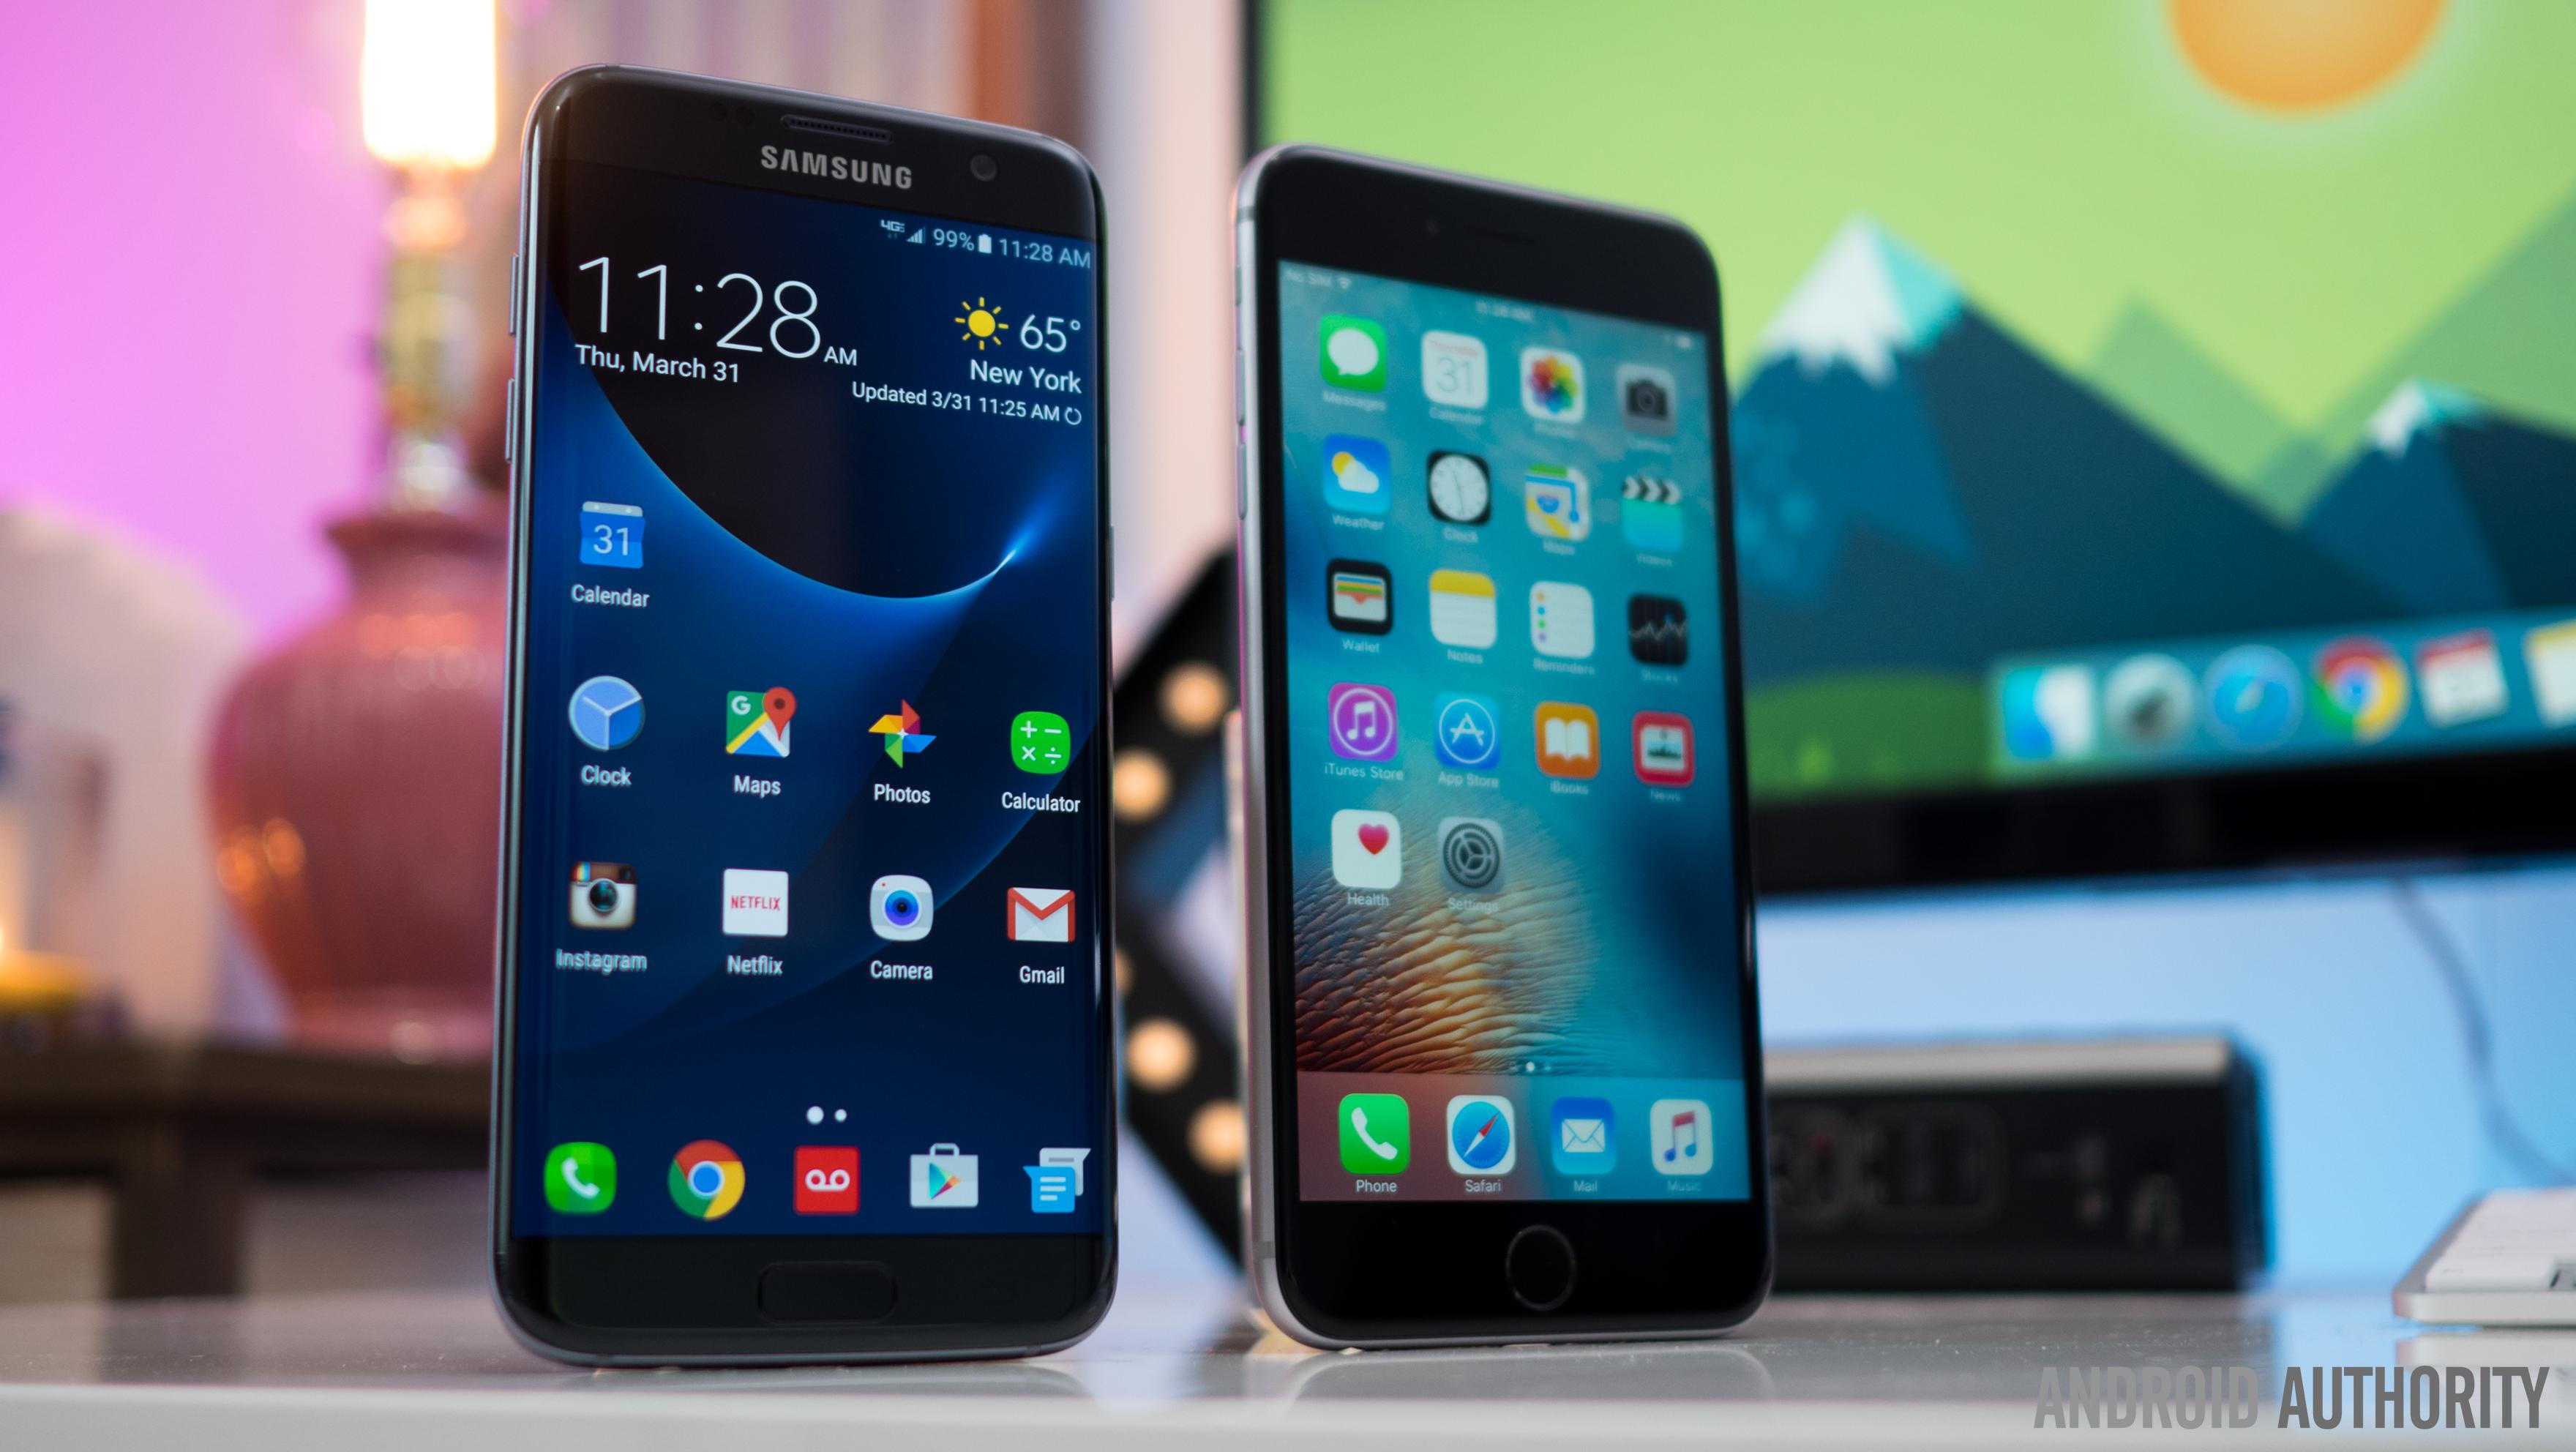 Galaxy-S7-Edge-vs-iPhone-6s-plus-3of18